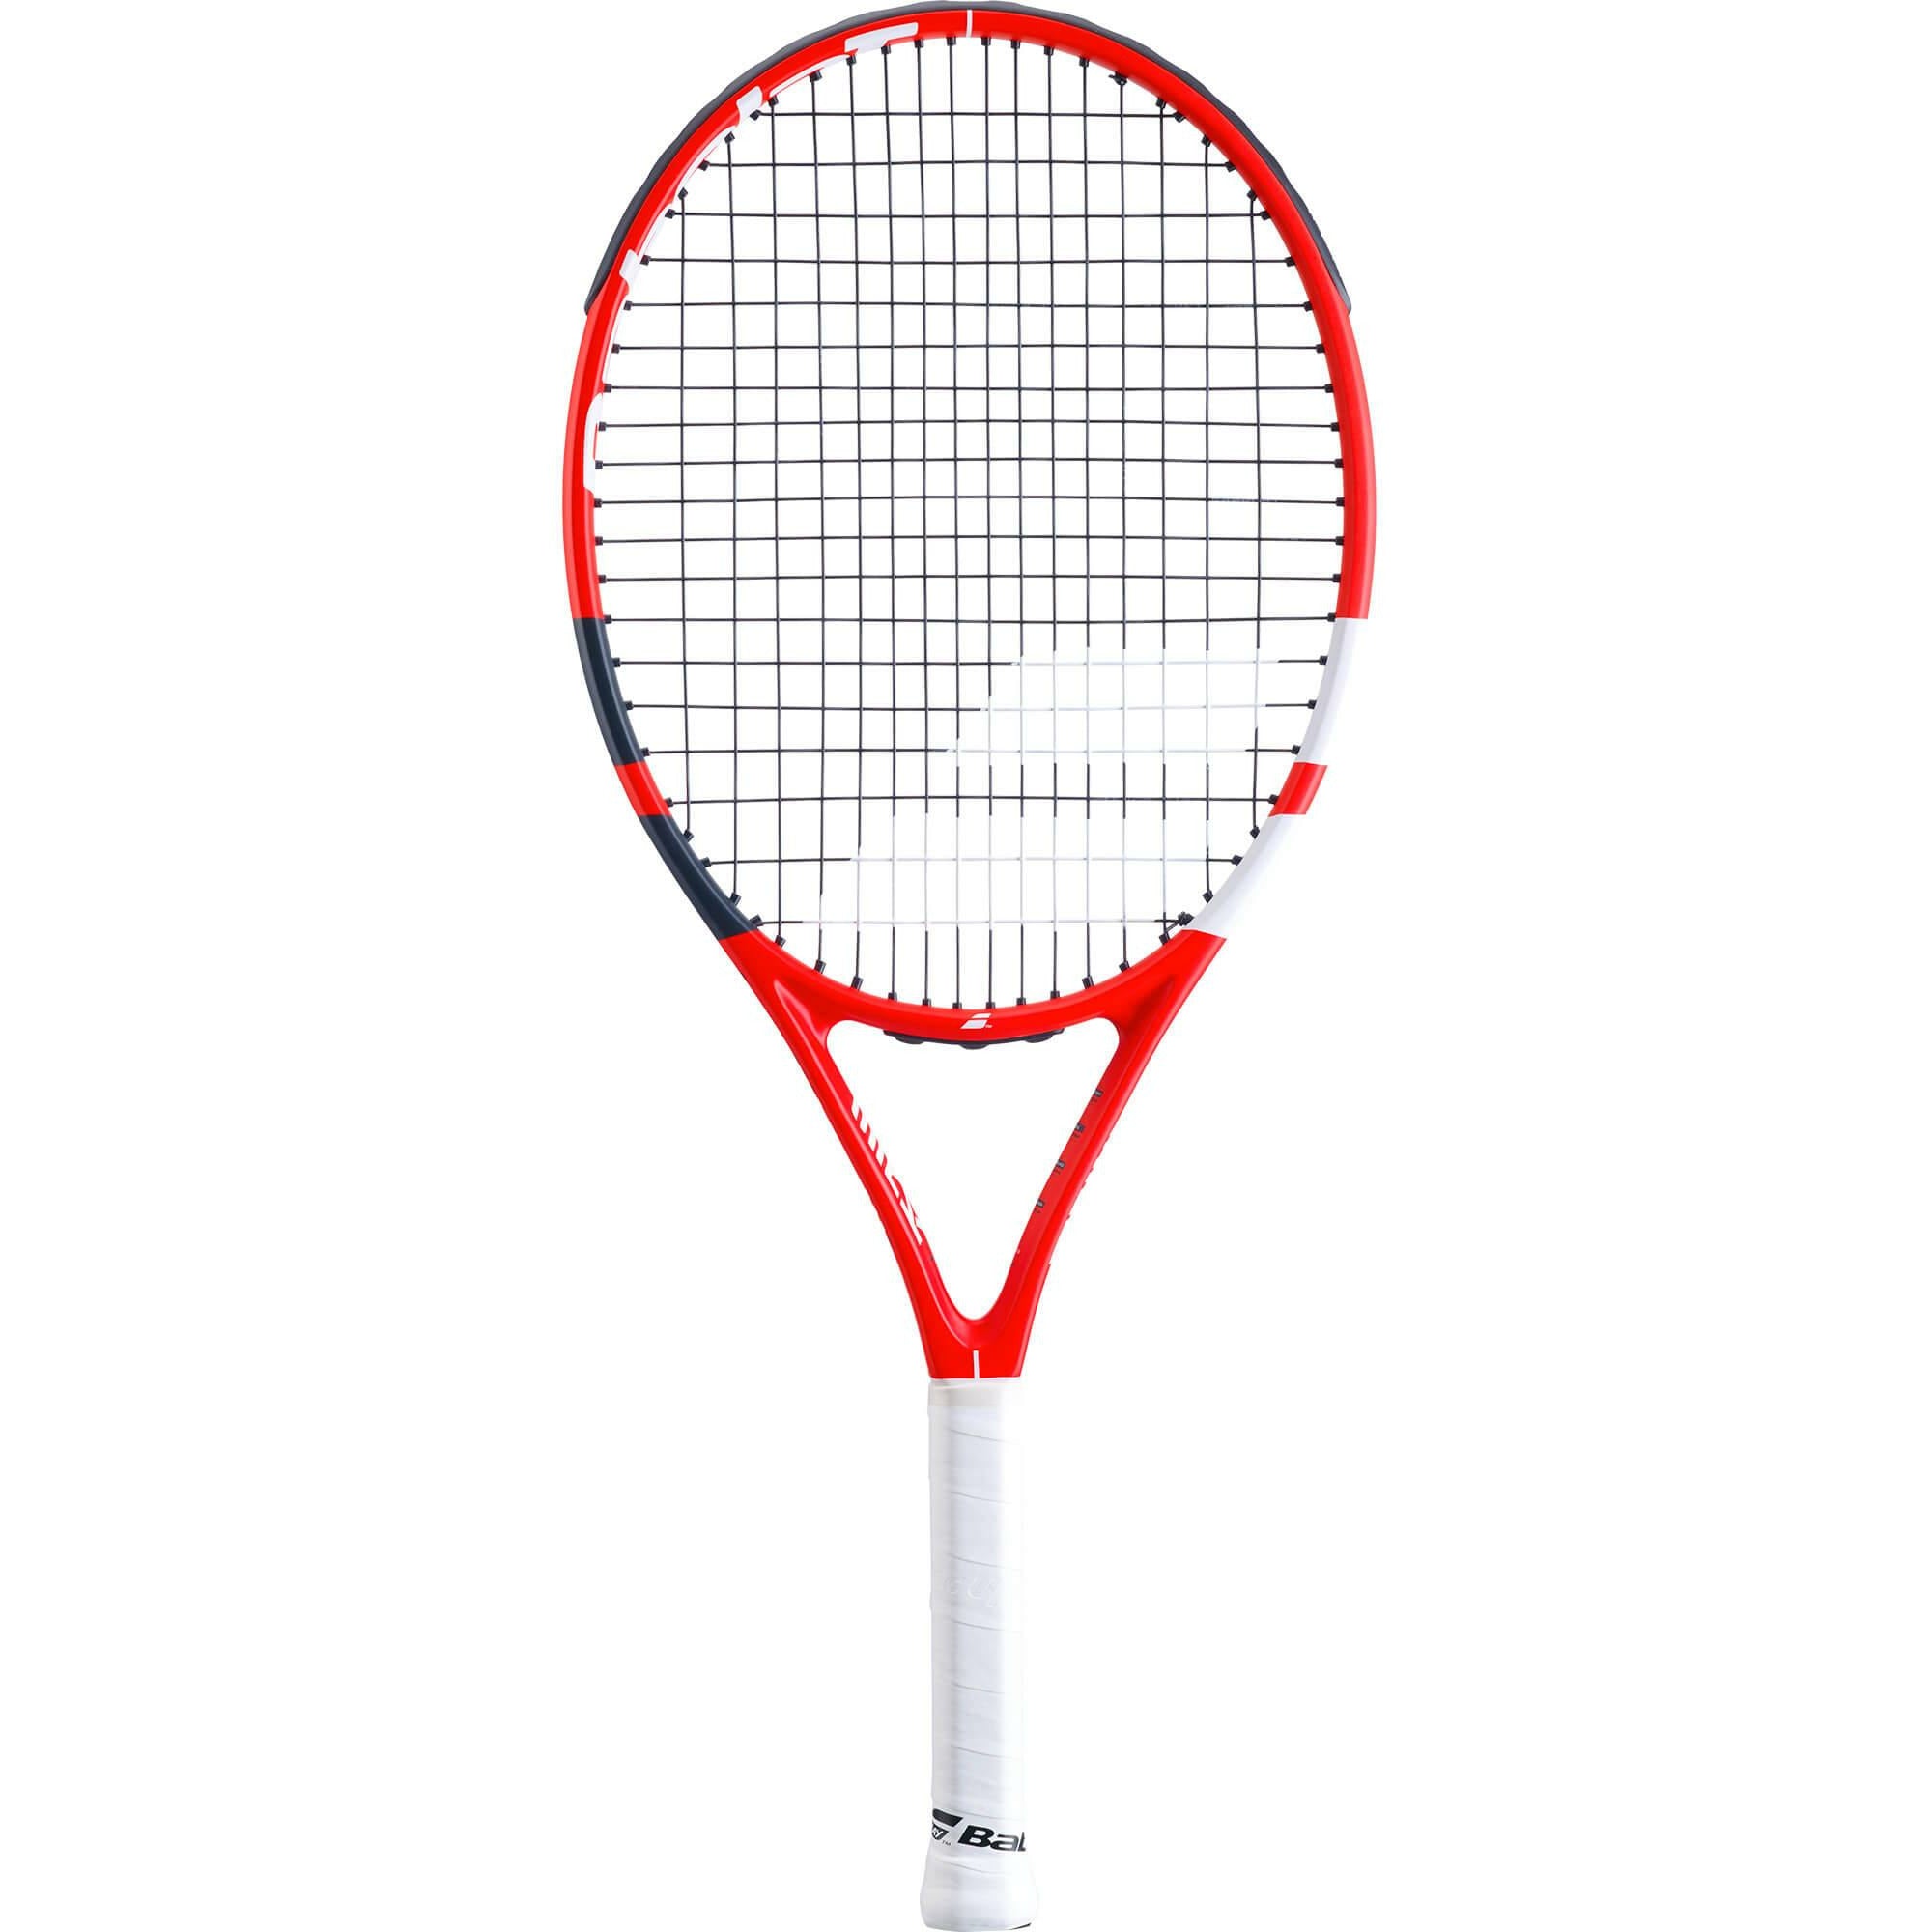 Babolat Strike 24 Inch Junior Tennis Racket